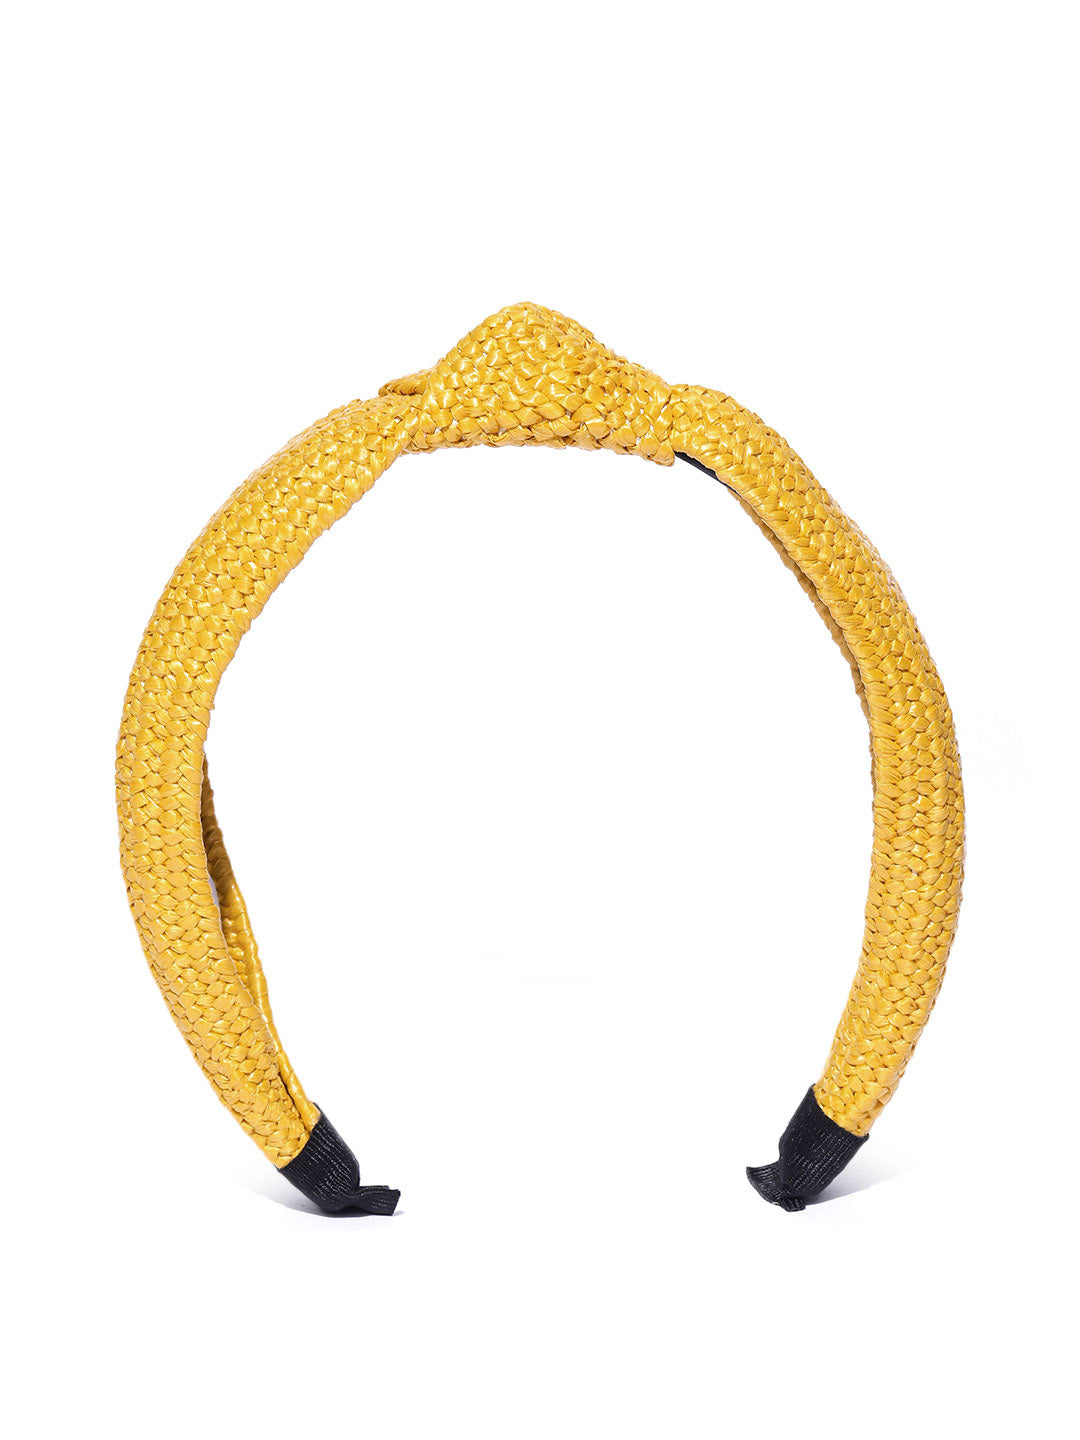 Blueberry yellow jute knot hairband